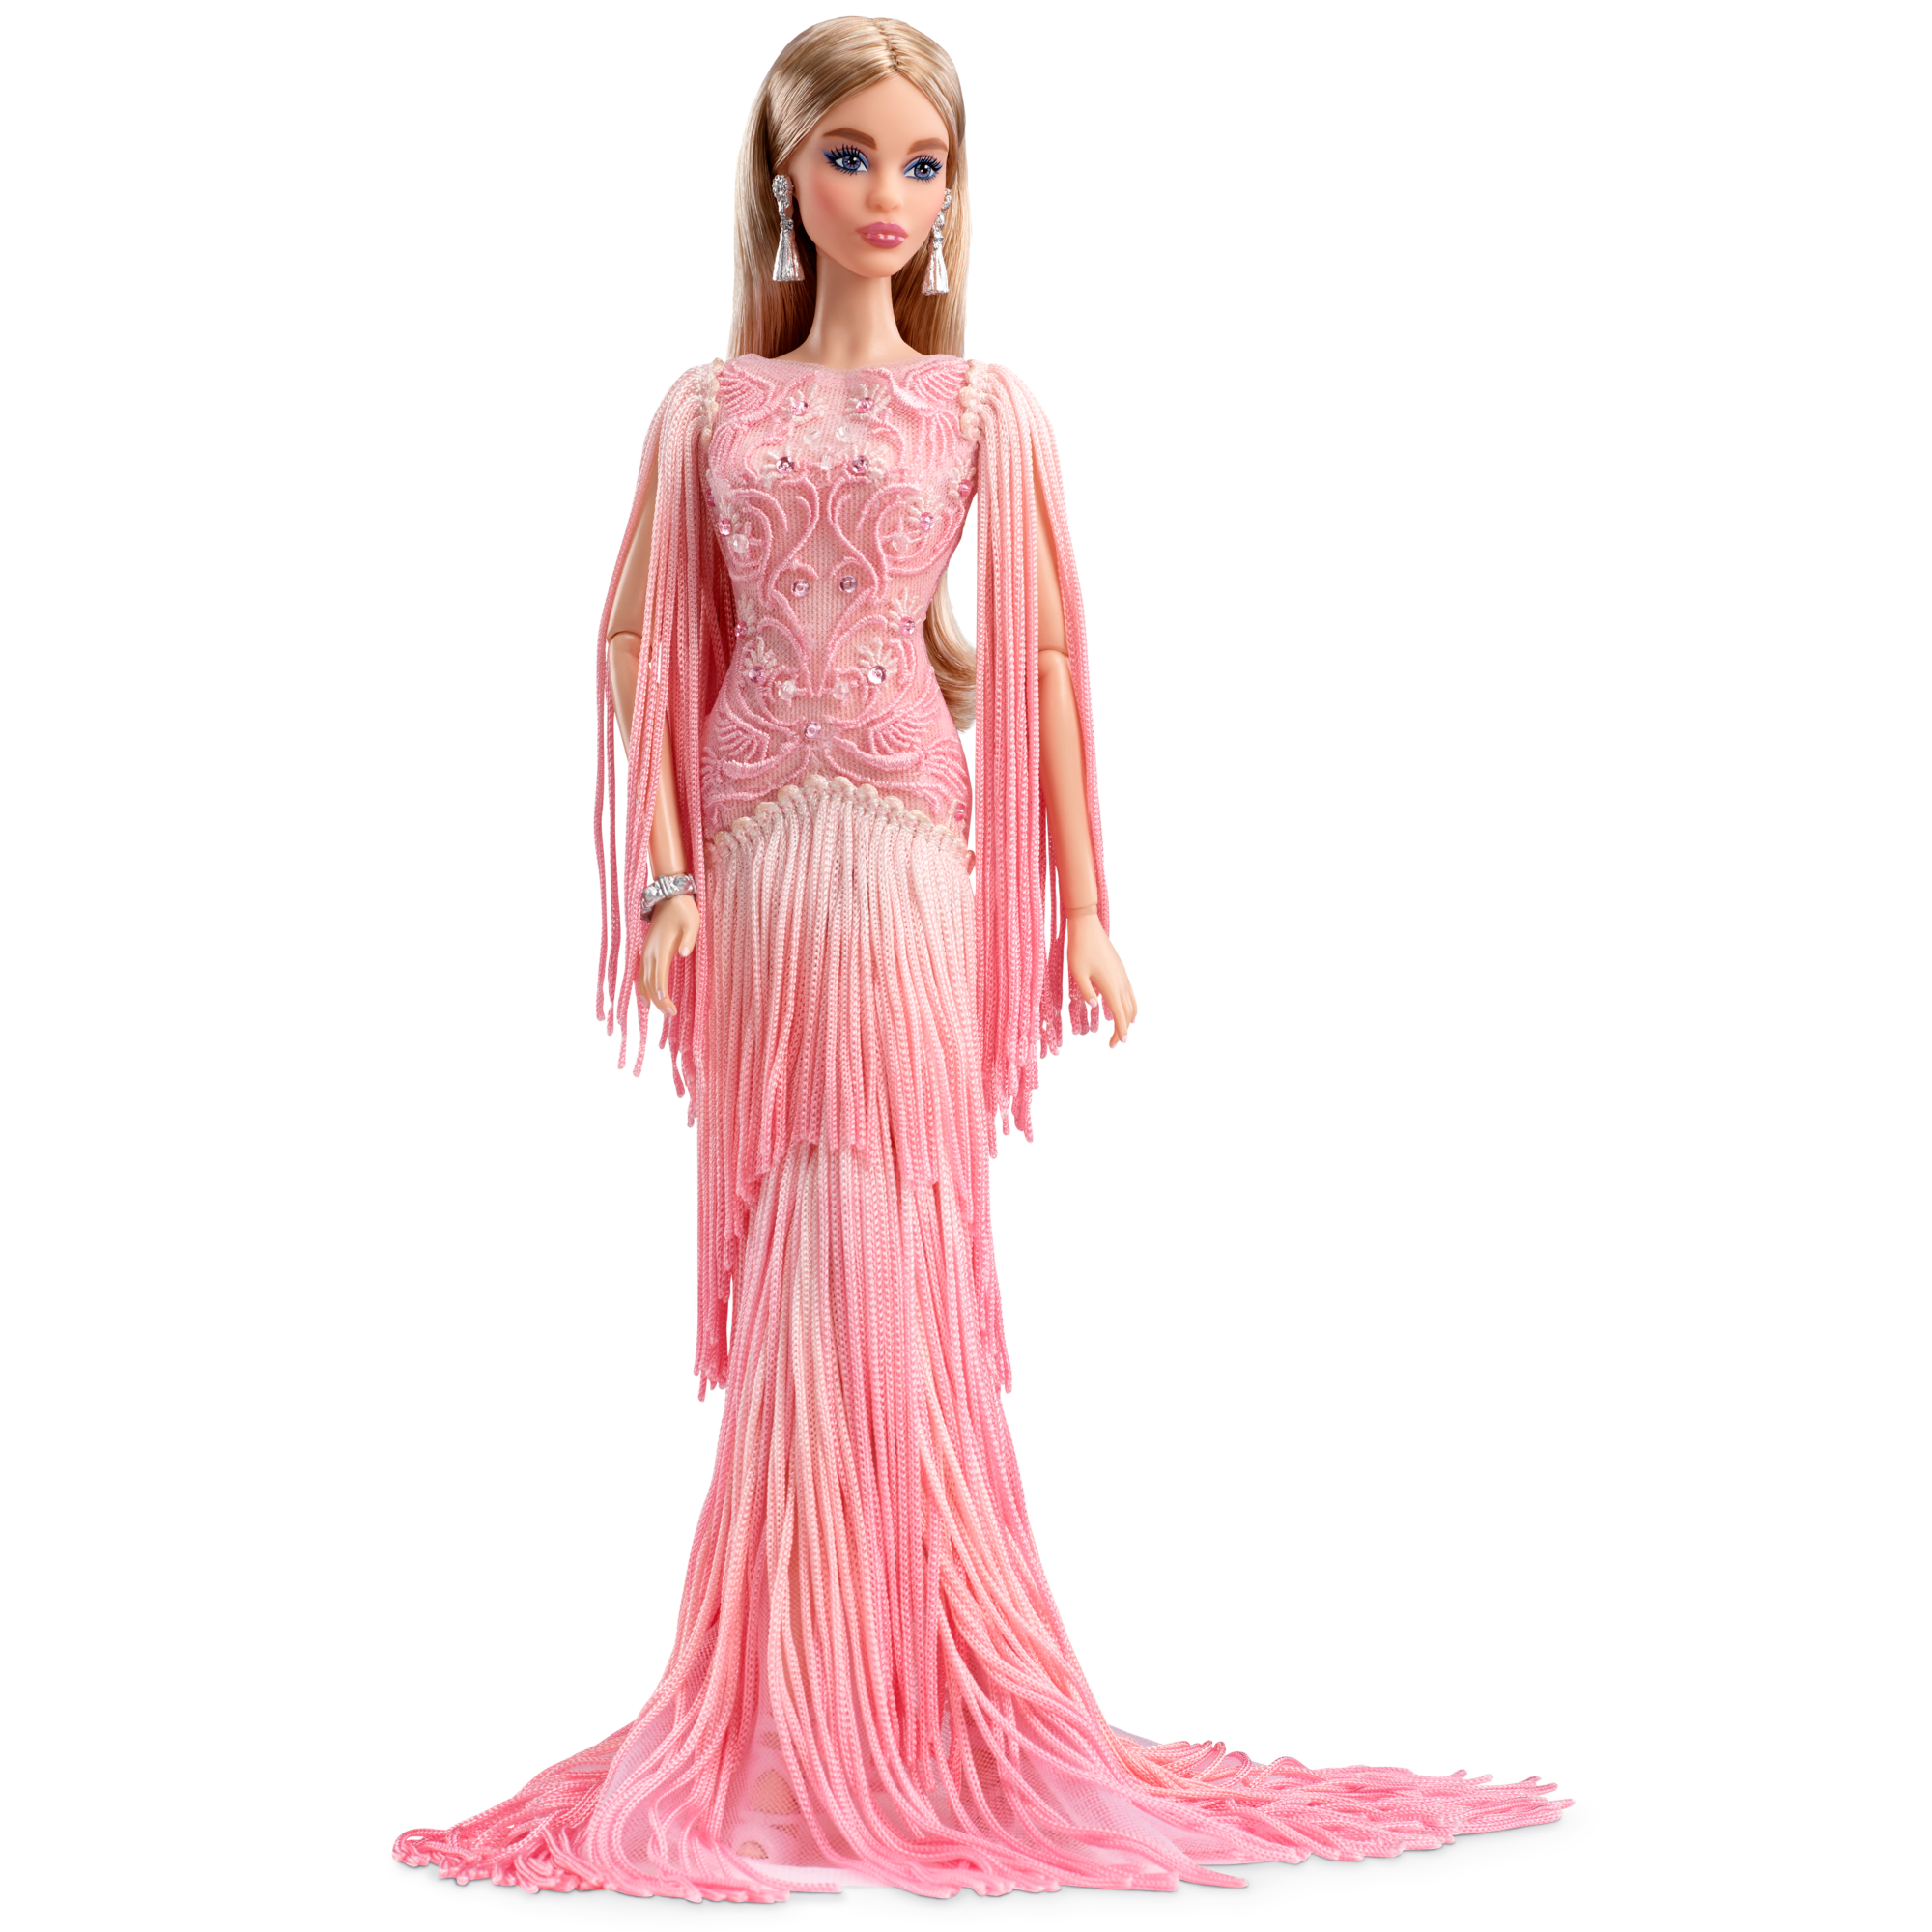 Blush Fringed Gown Barbie Doll dwf52 Barbie Signature куклы